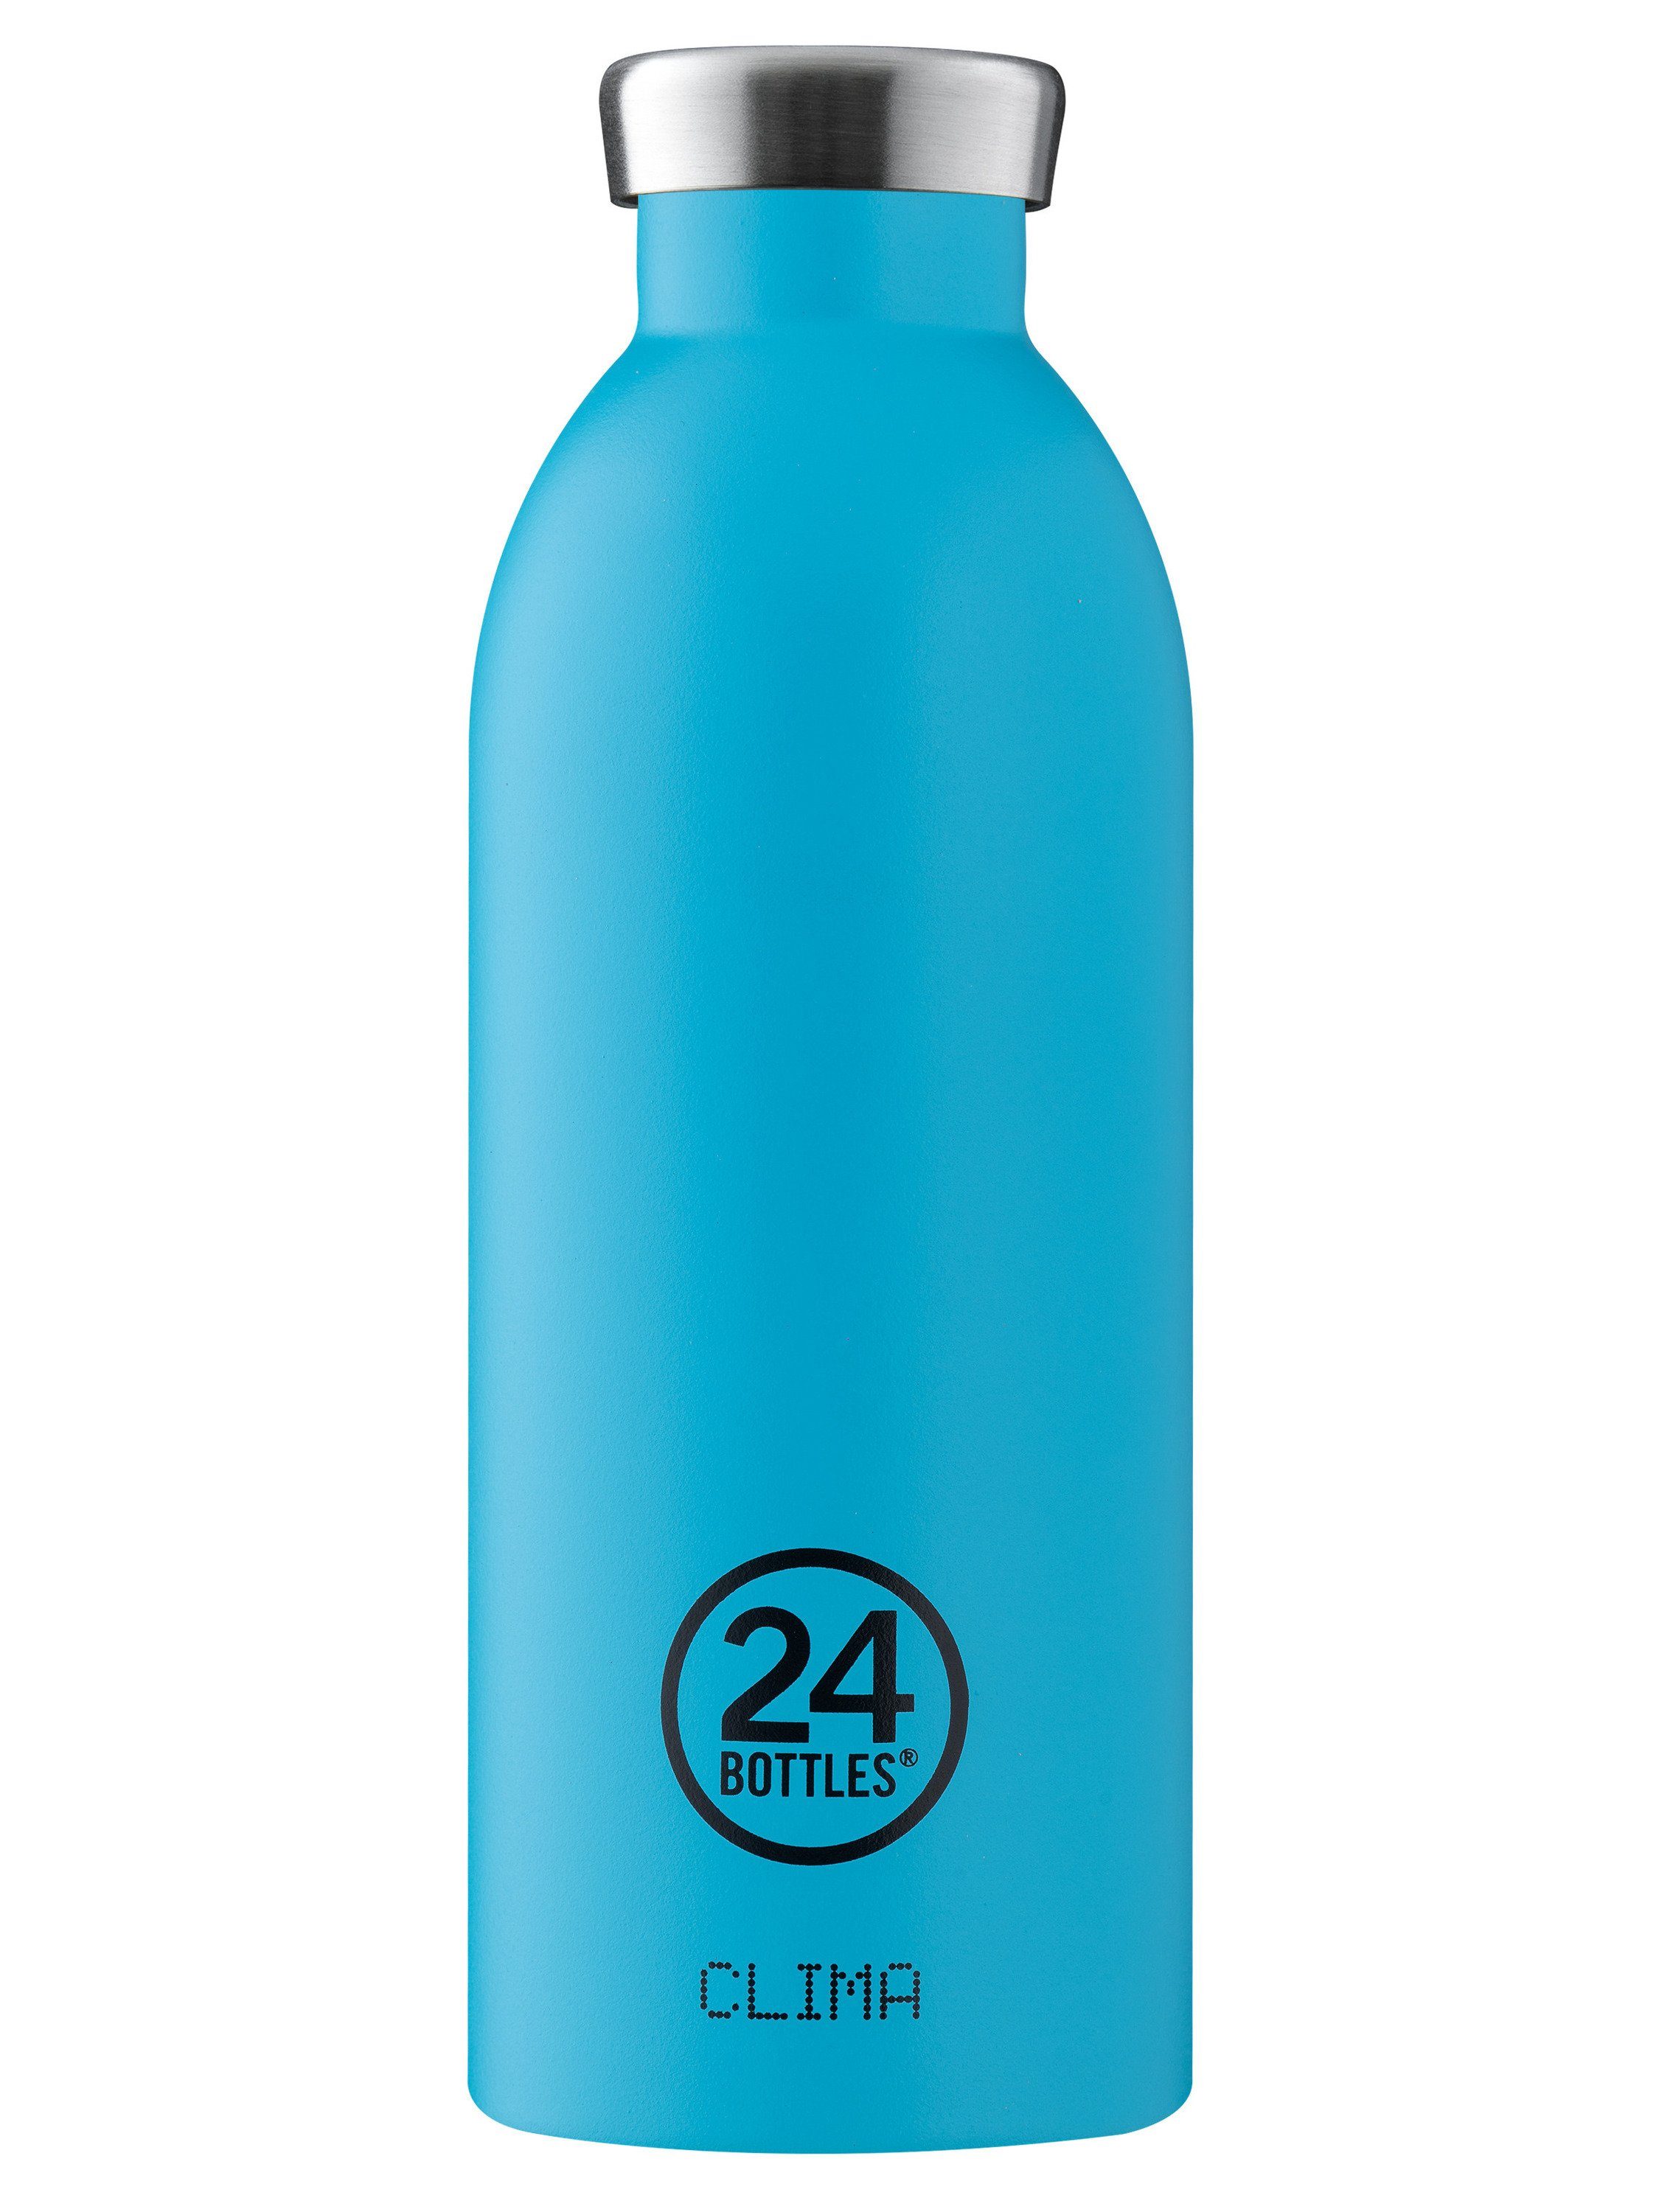 lagoon Bottles 24 blue 500ml Trinkflasche Clima